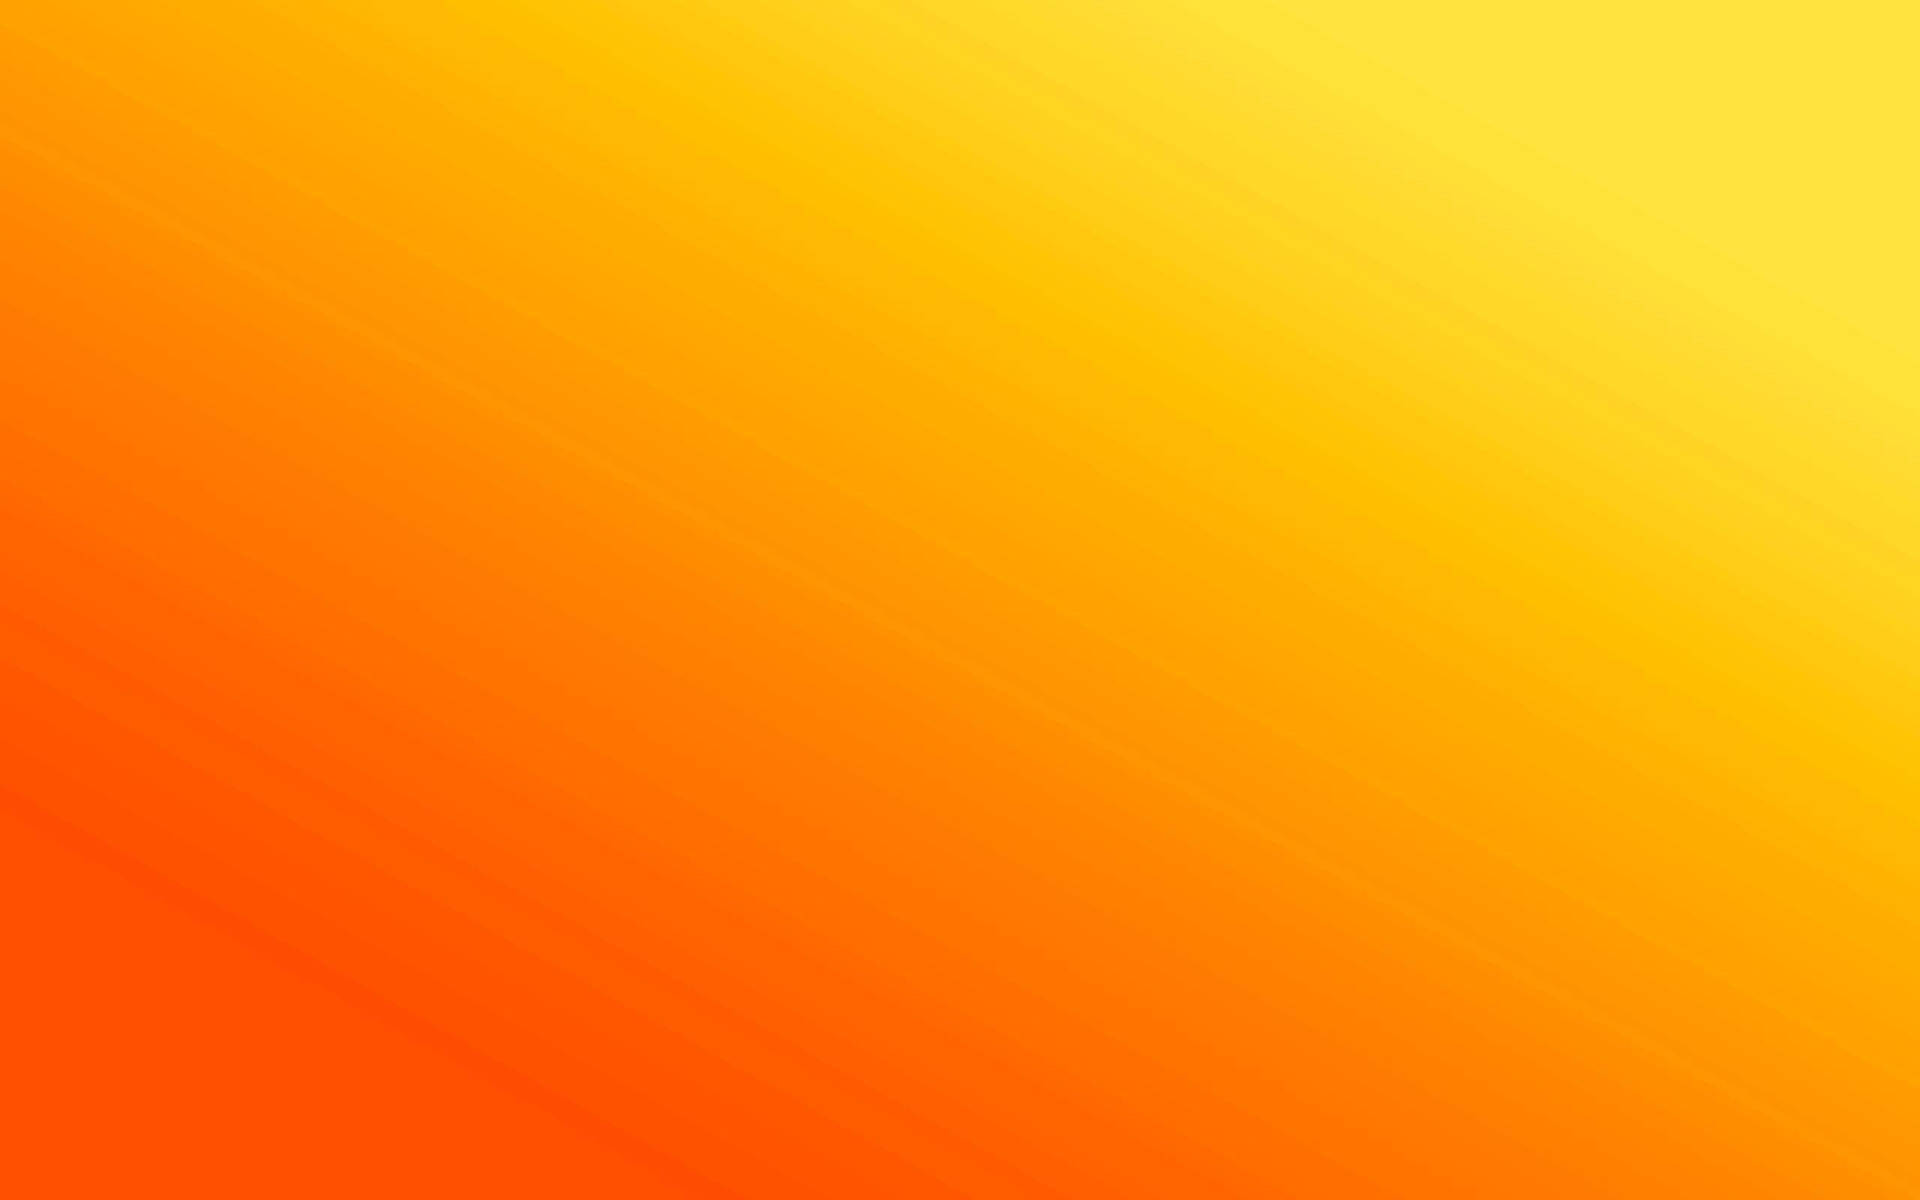 Plain Yellow And Orange Gradient Desktop Picture